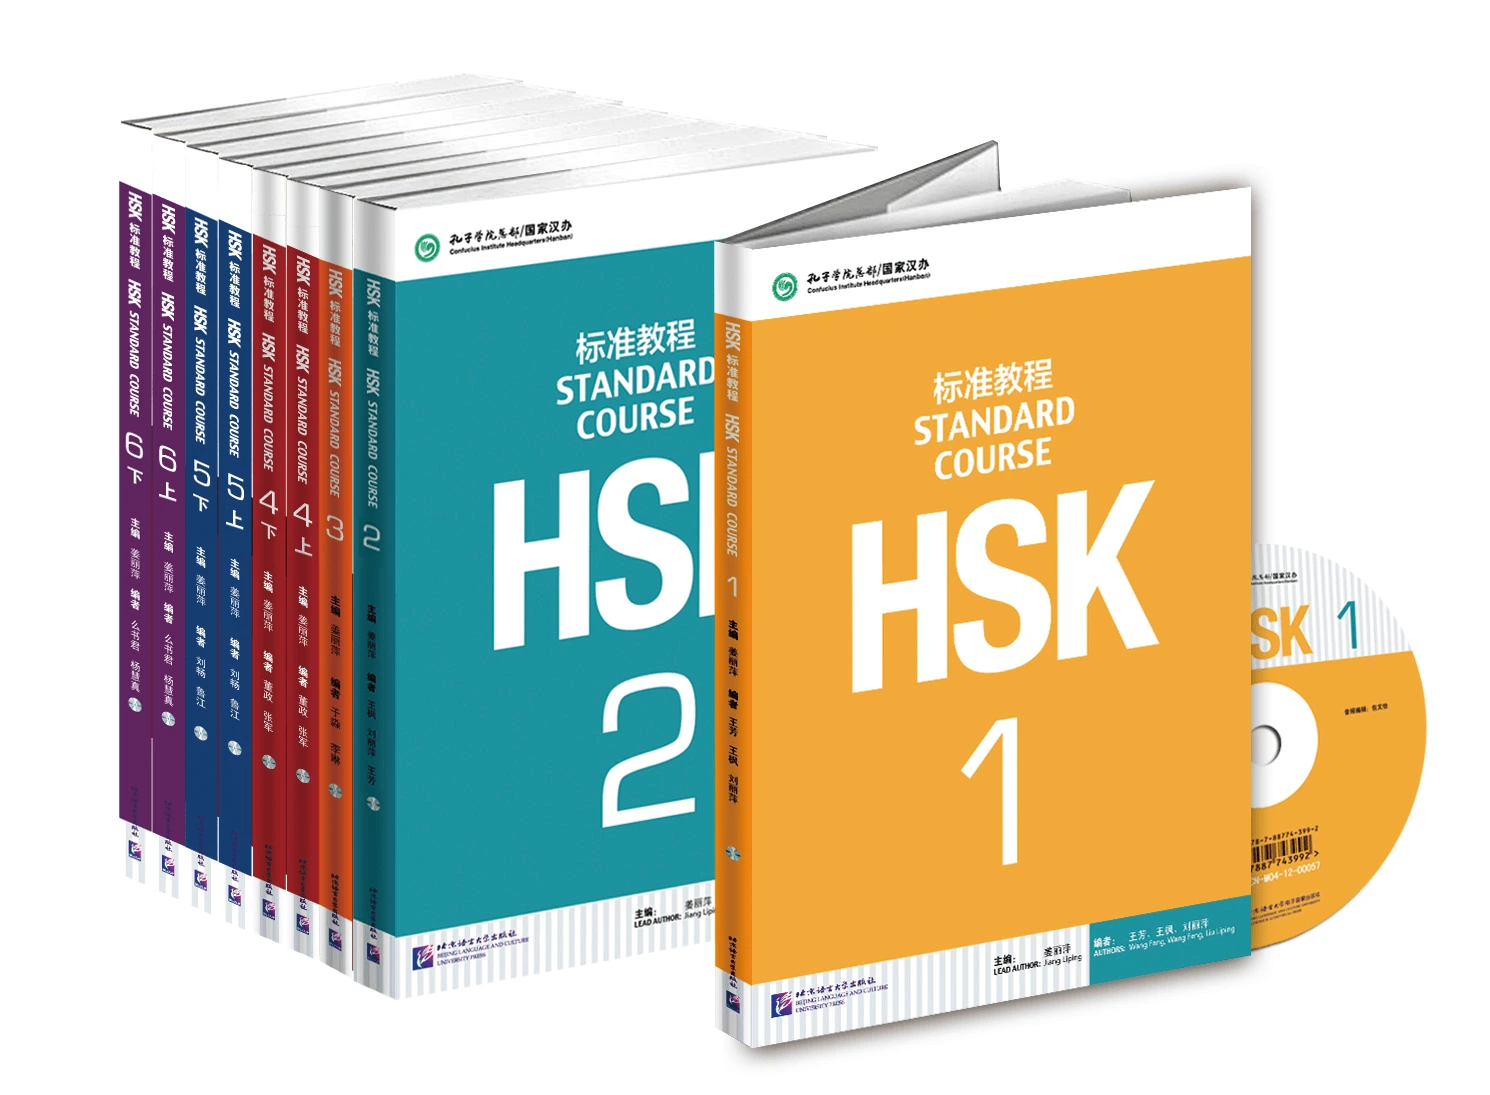 HSK standard course book series by Blcup-min